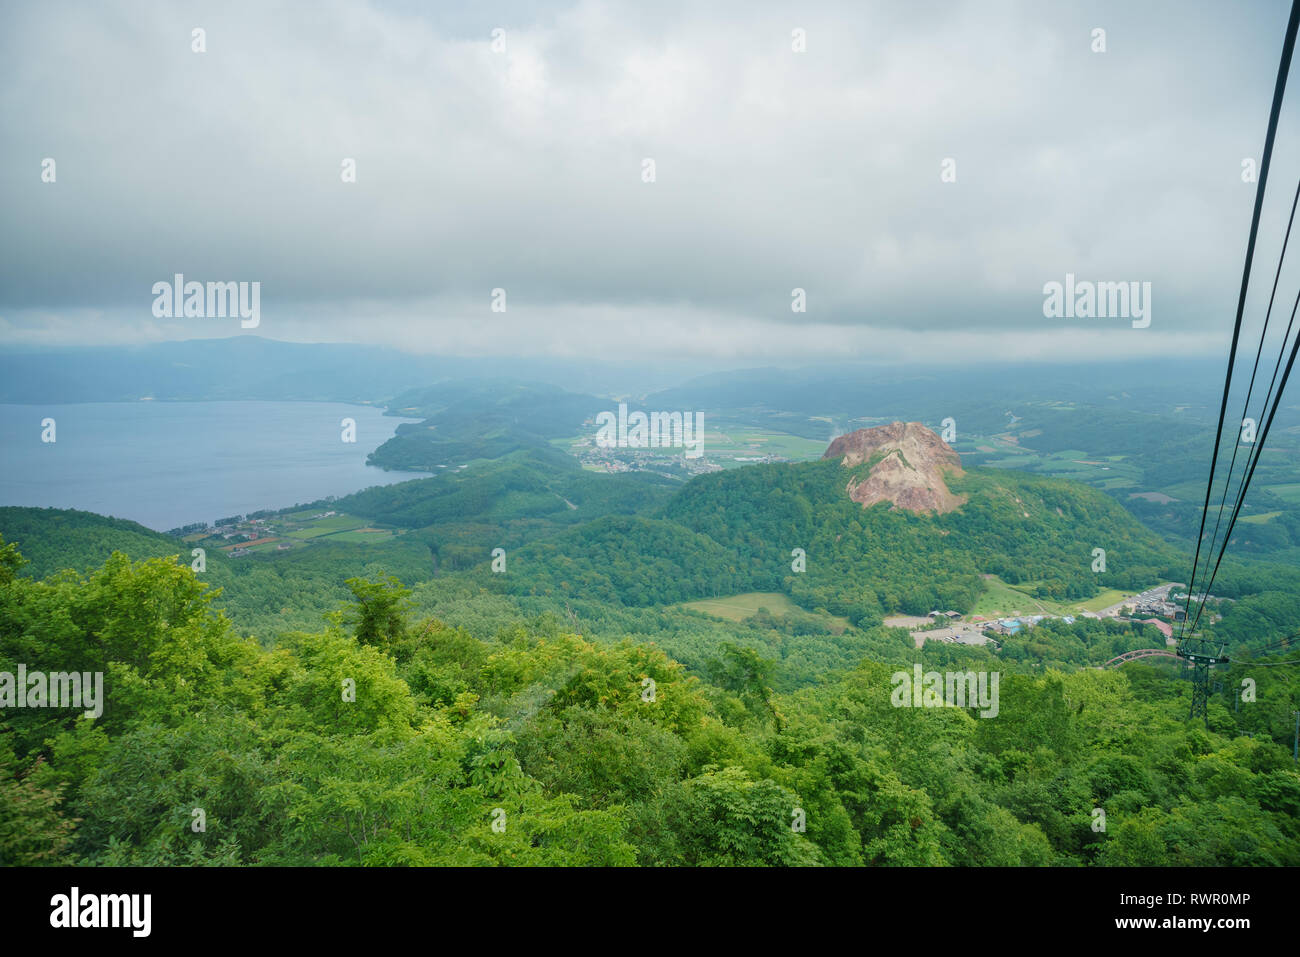 The beautiful Showa shinzan of Mount Usu area, view from a cable car at Hokkaido, Japan Stock Photo